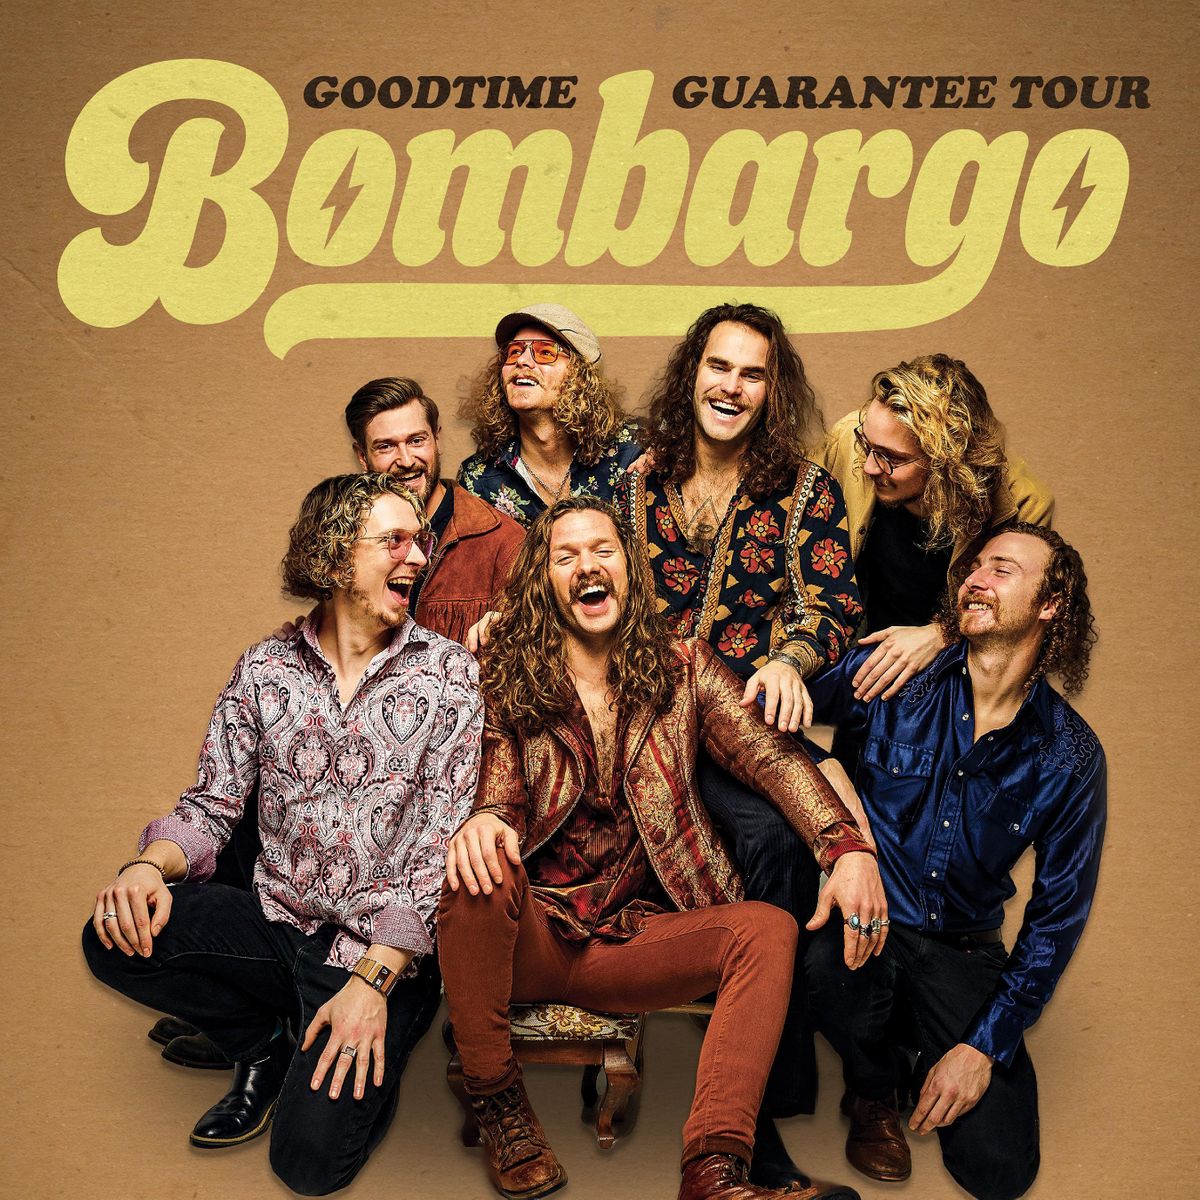 Bombargo "Goodtime Guarantee Tour "